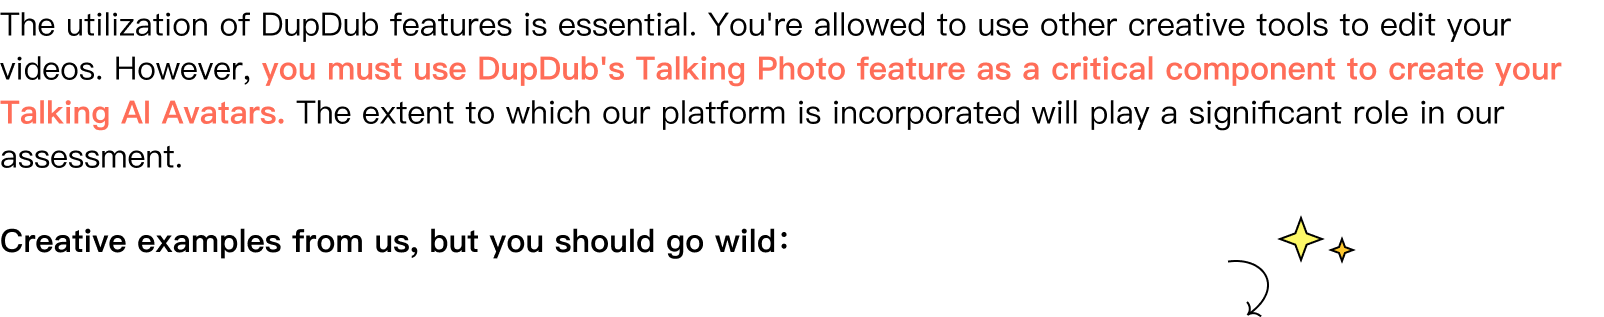 Using DupDub talking photo features